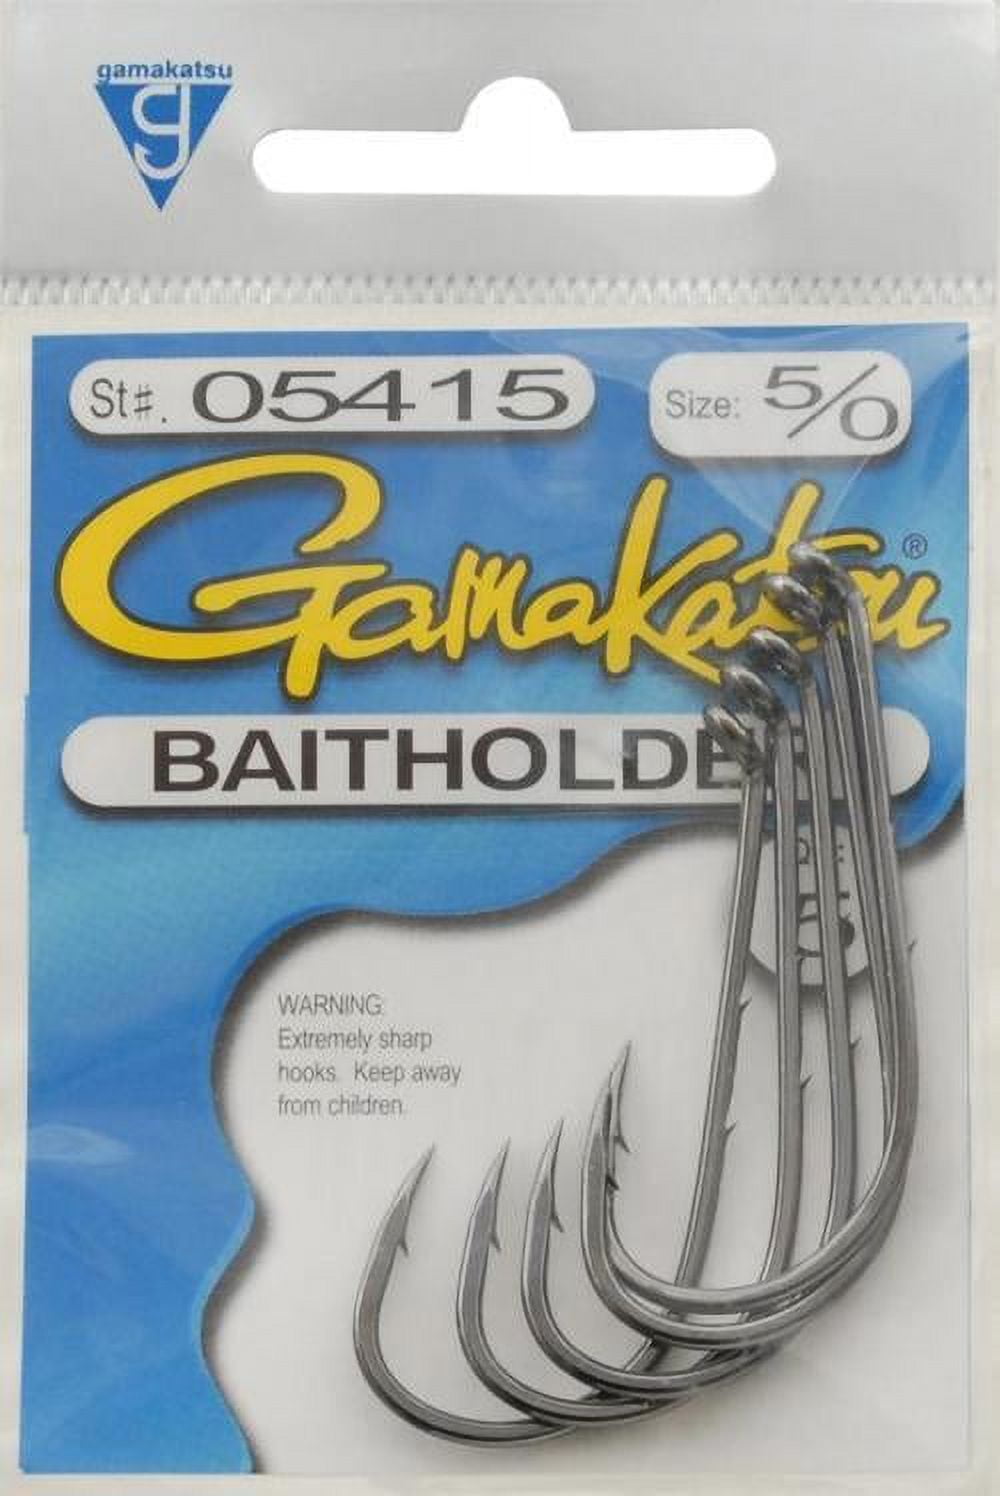 Gamakatsu EWG Hooks 5 sizes 1/0, 2/0, 3/0, 4/0, and 5/0 – M & C's  Handcrafted Jigs & Lures